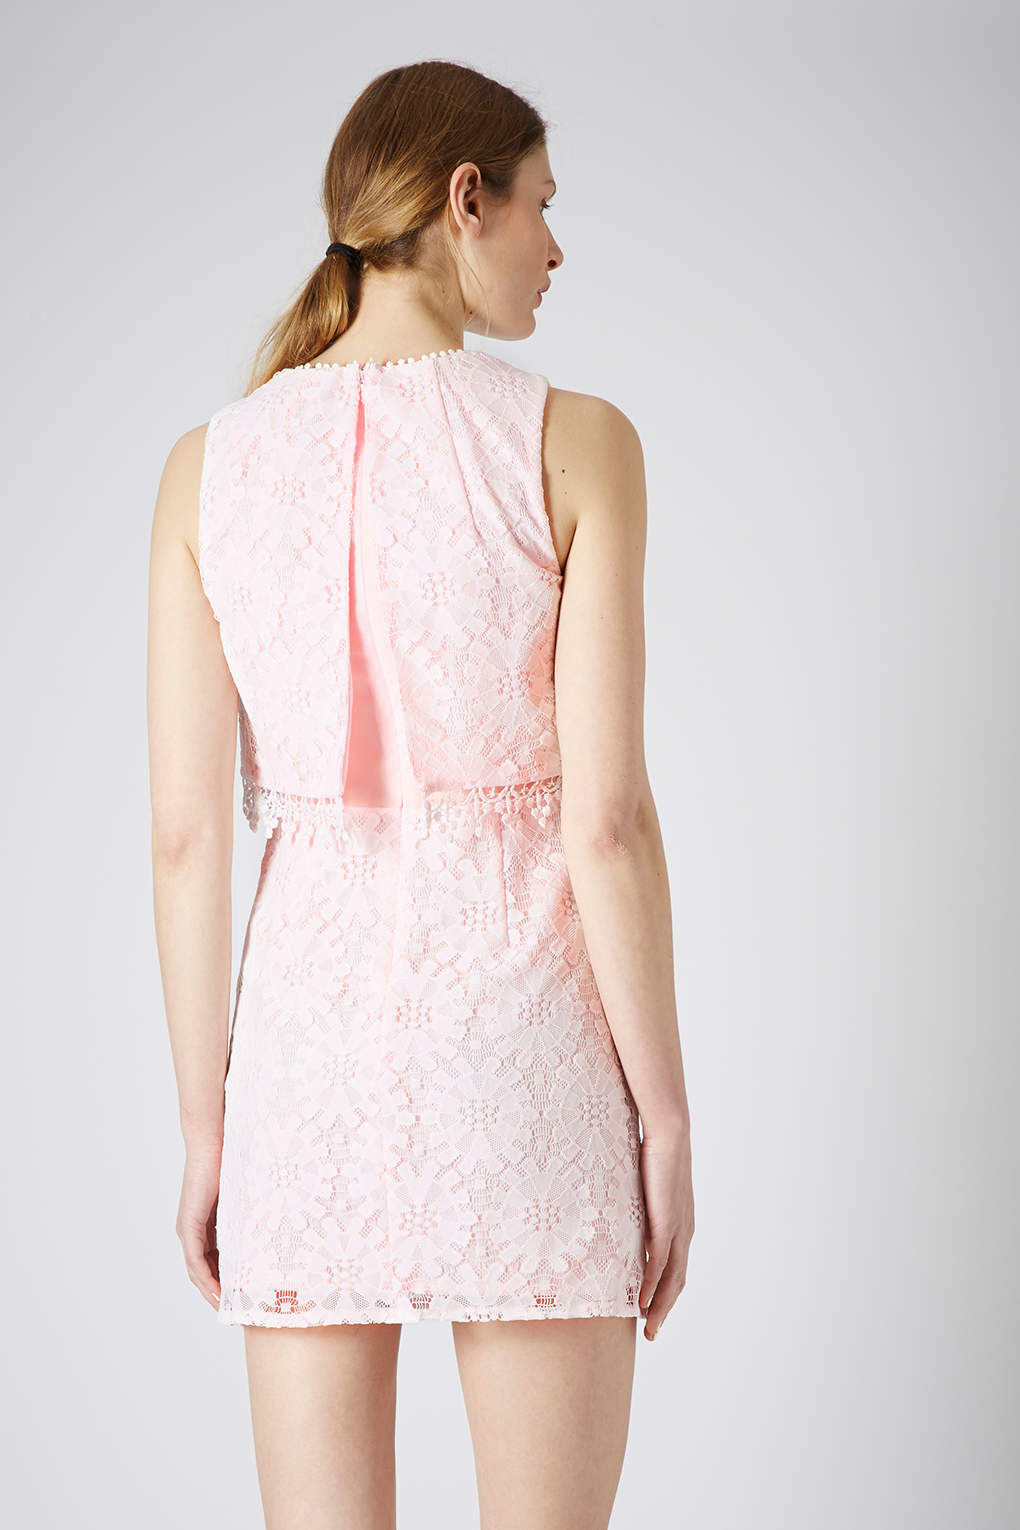 topshop pink lace dress